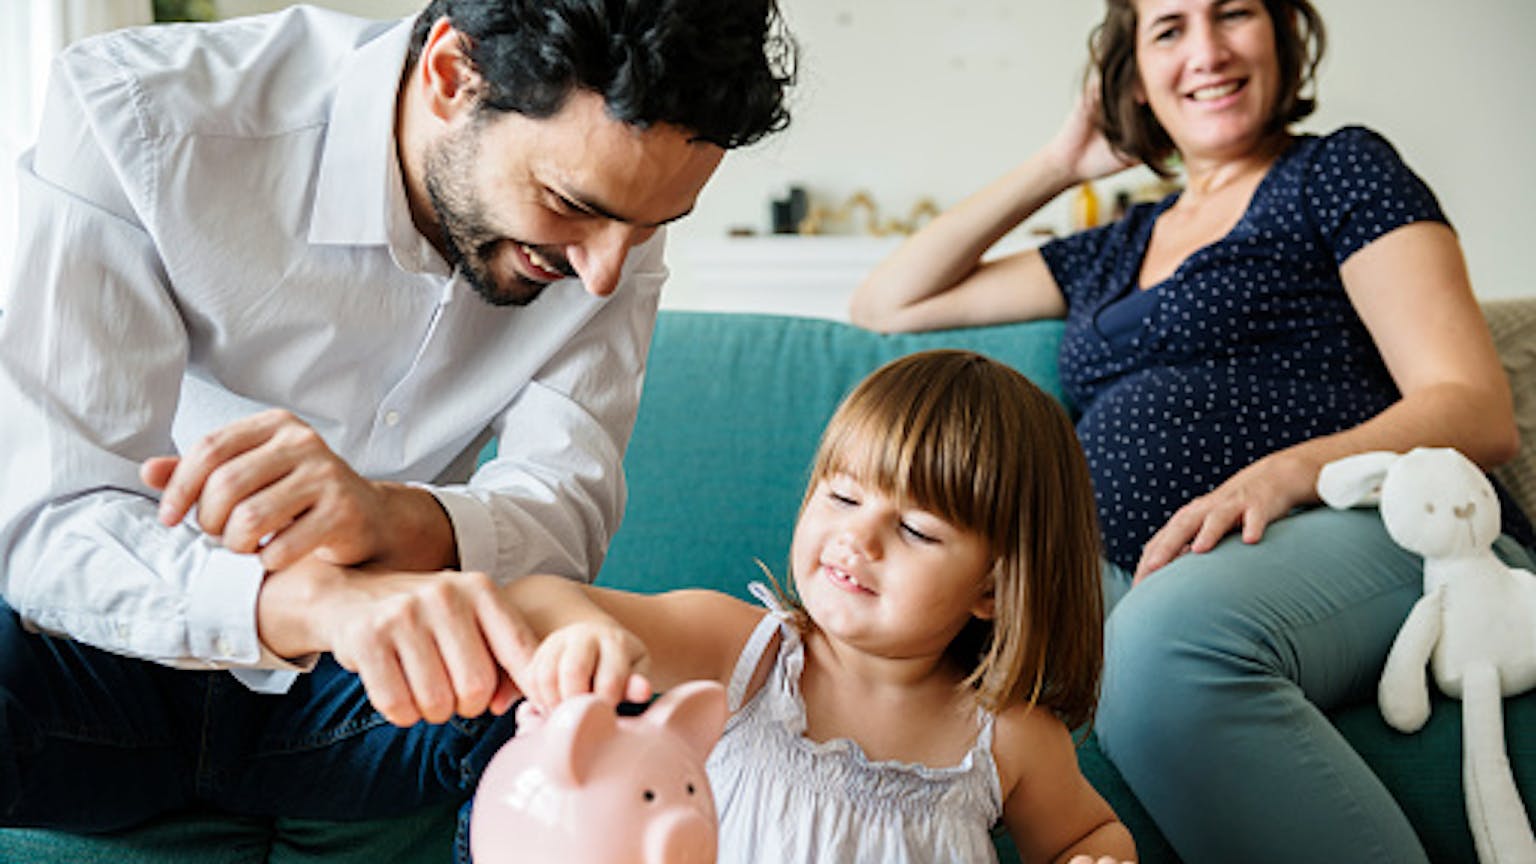 Family teaching their kids financial education